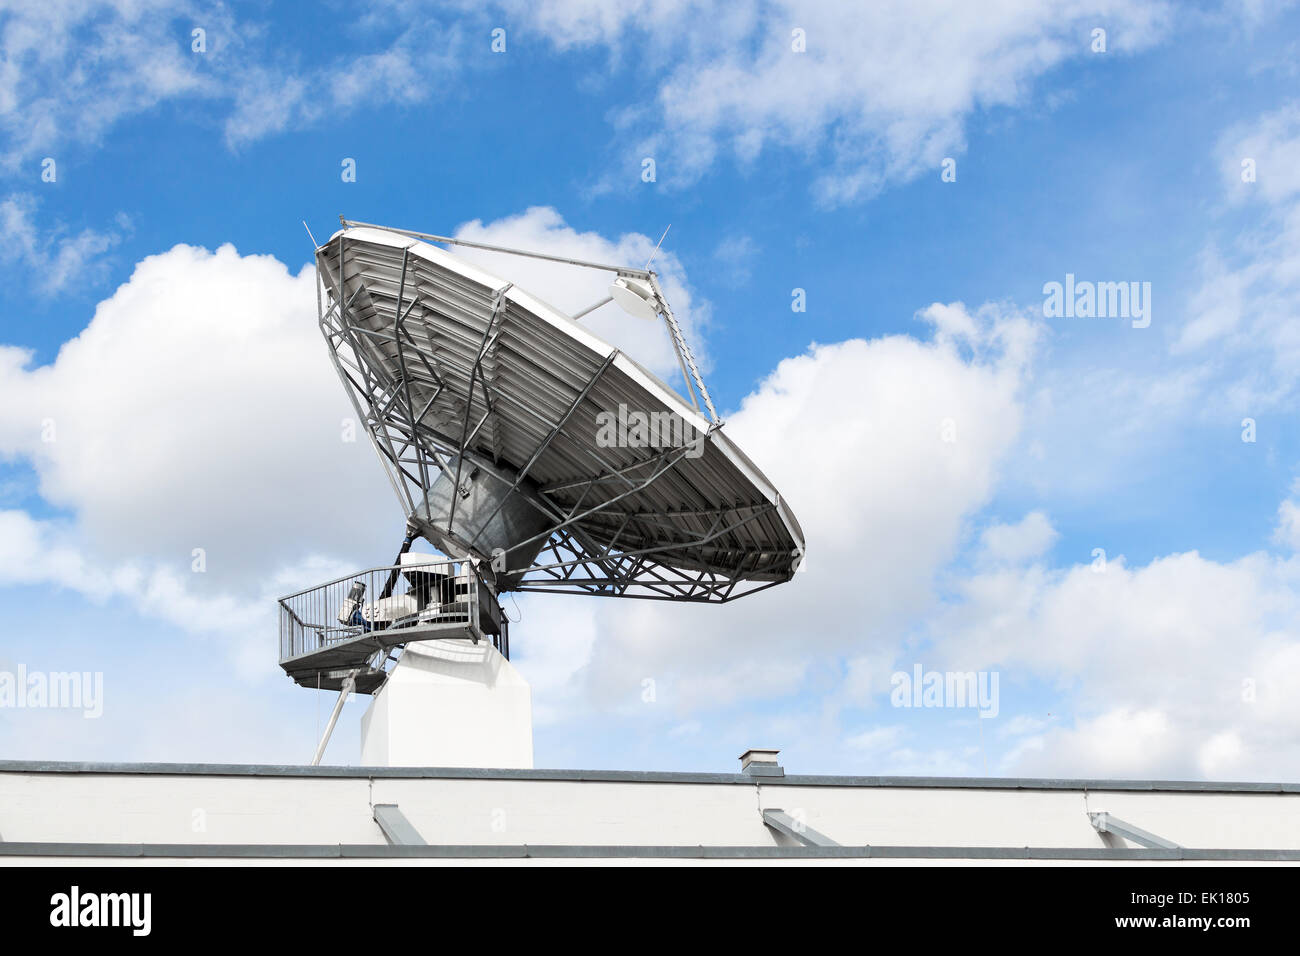 Radar antenna hi-res stock photography and images - Alamy